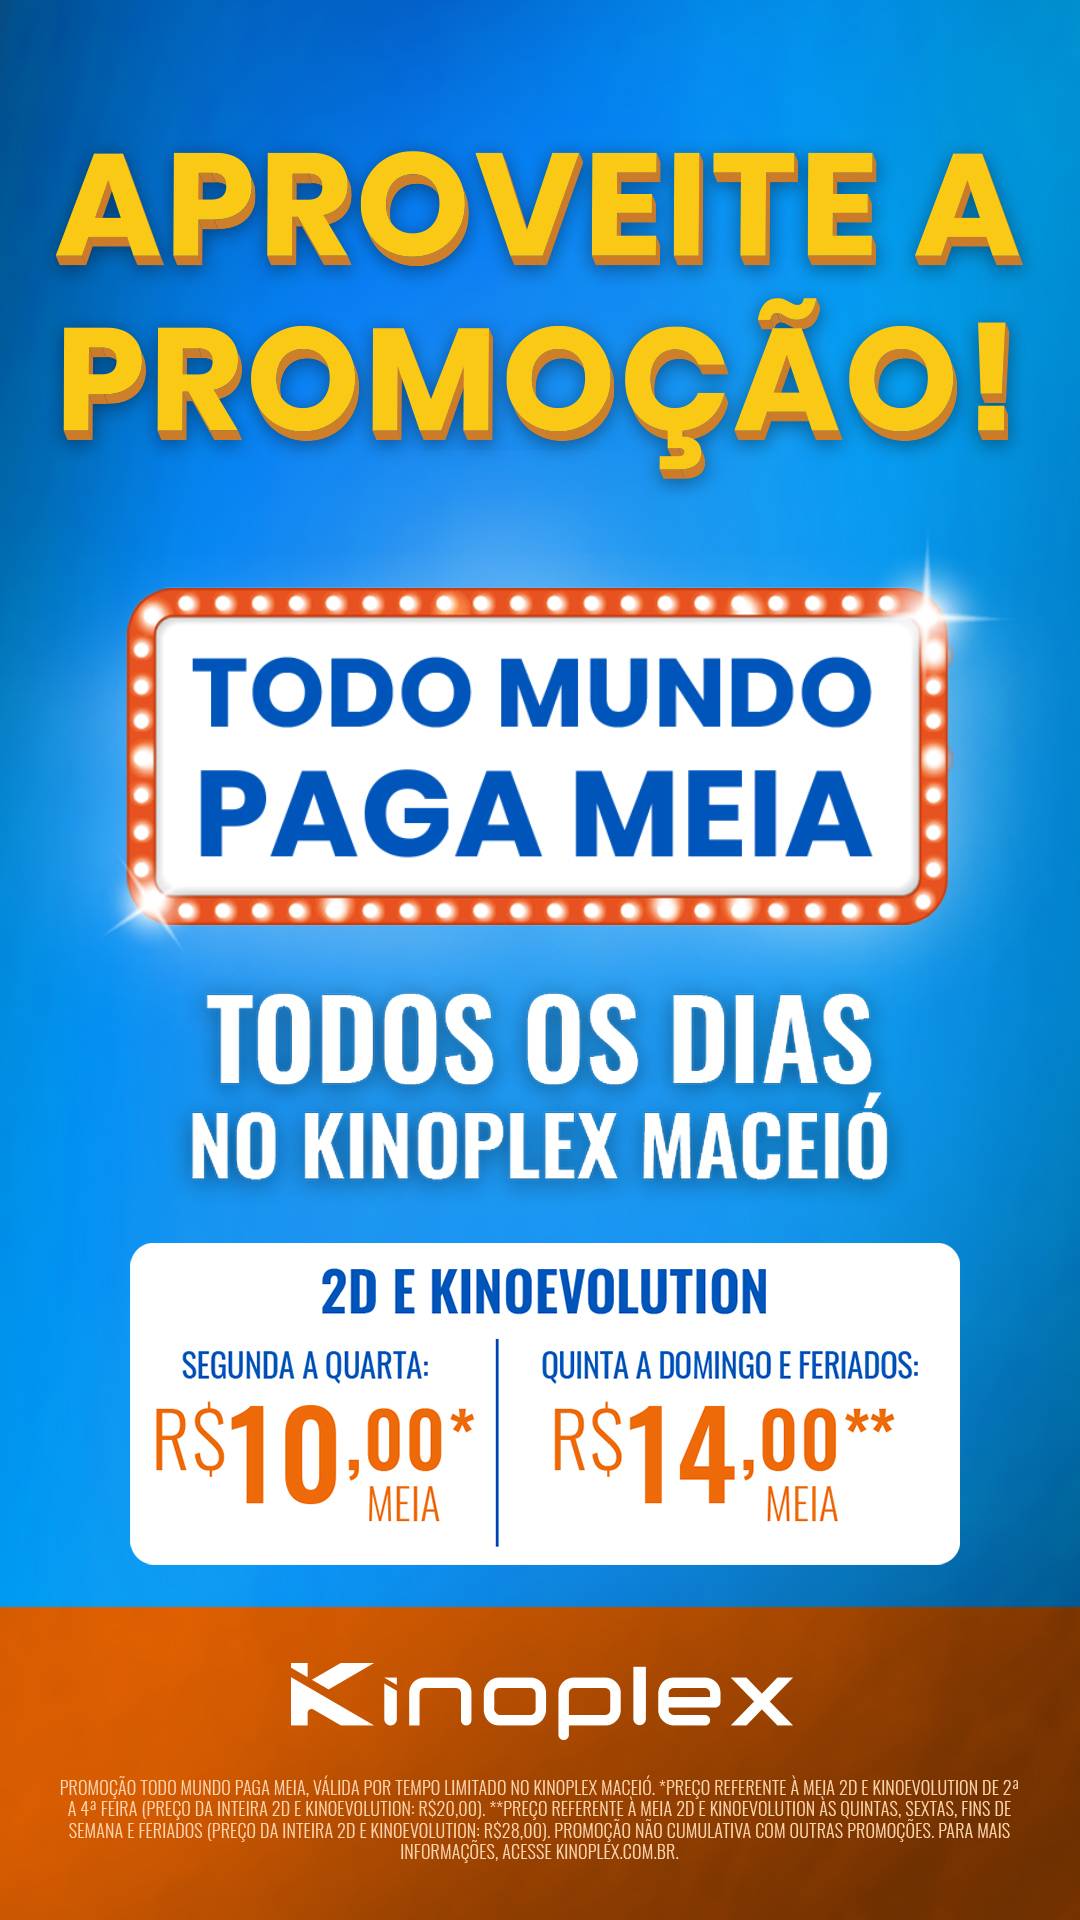 Kinoplex - Promoção Todo Mundo Paga Meia!